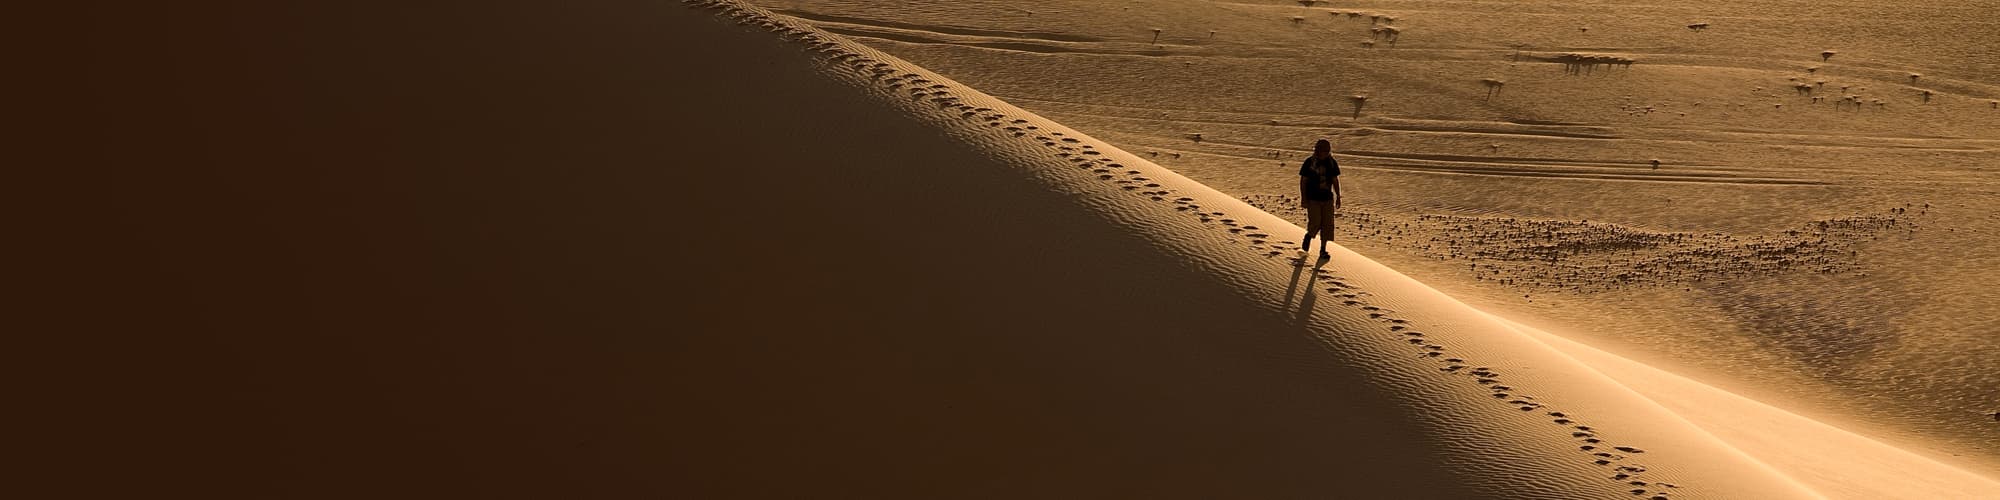 Voyage Désert Mauritanie © MOIRENC Camille / hemis.fr